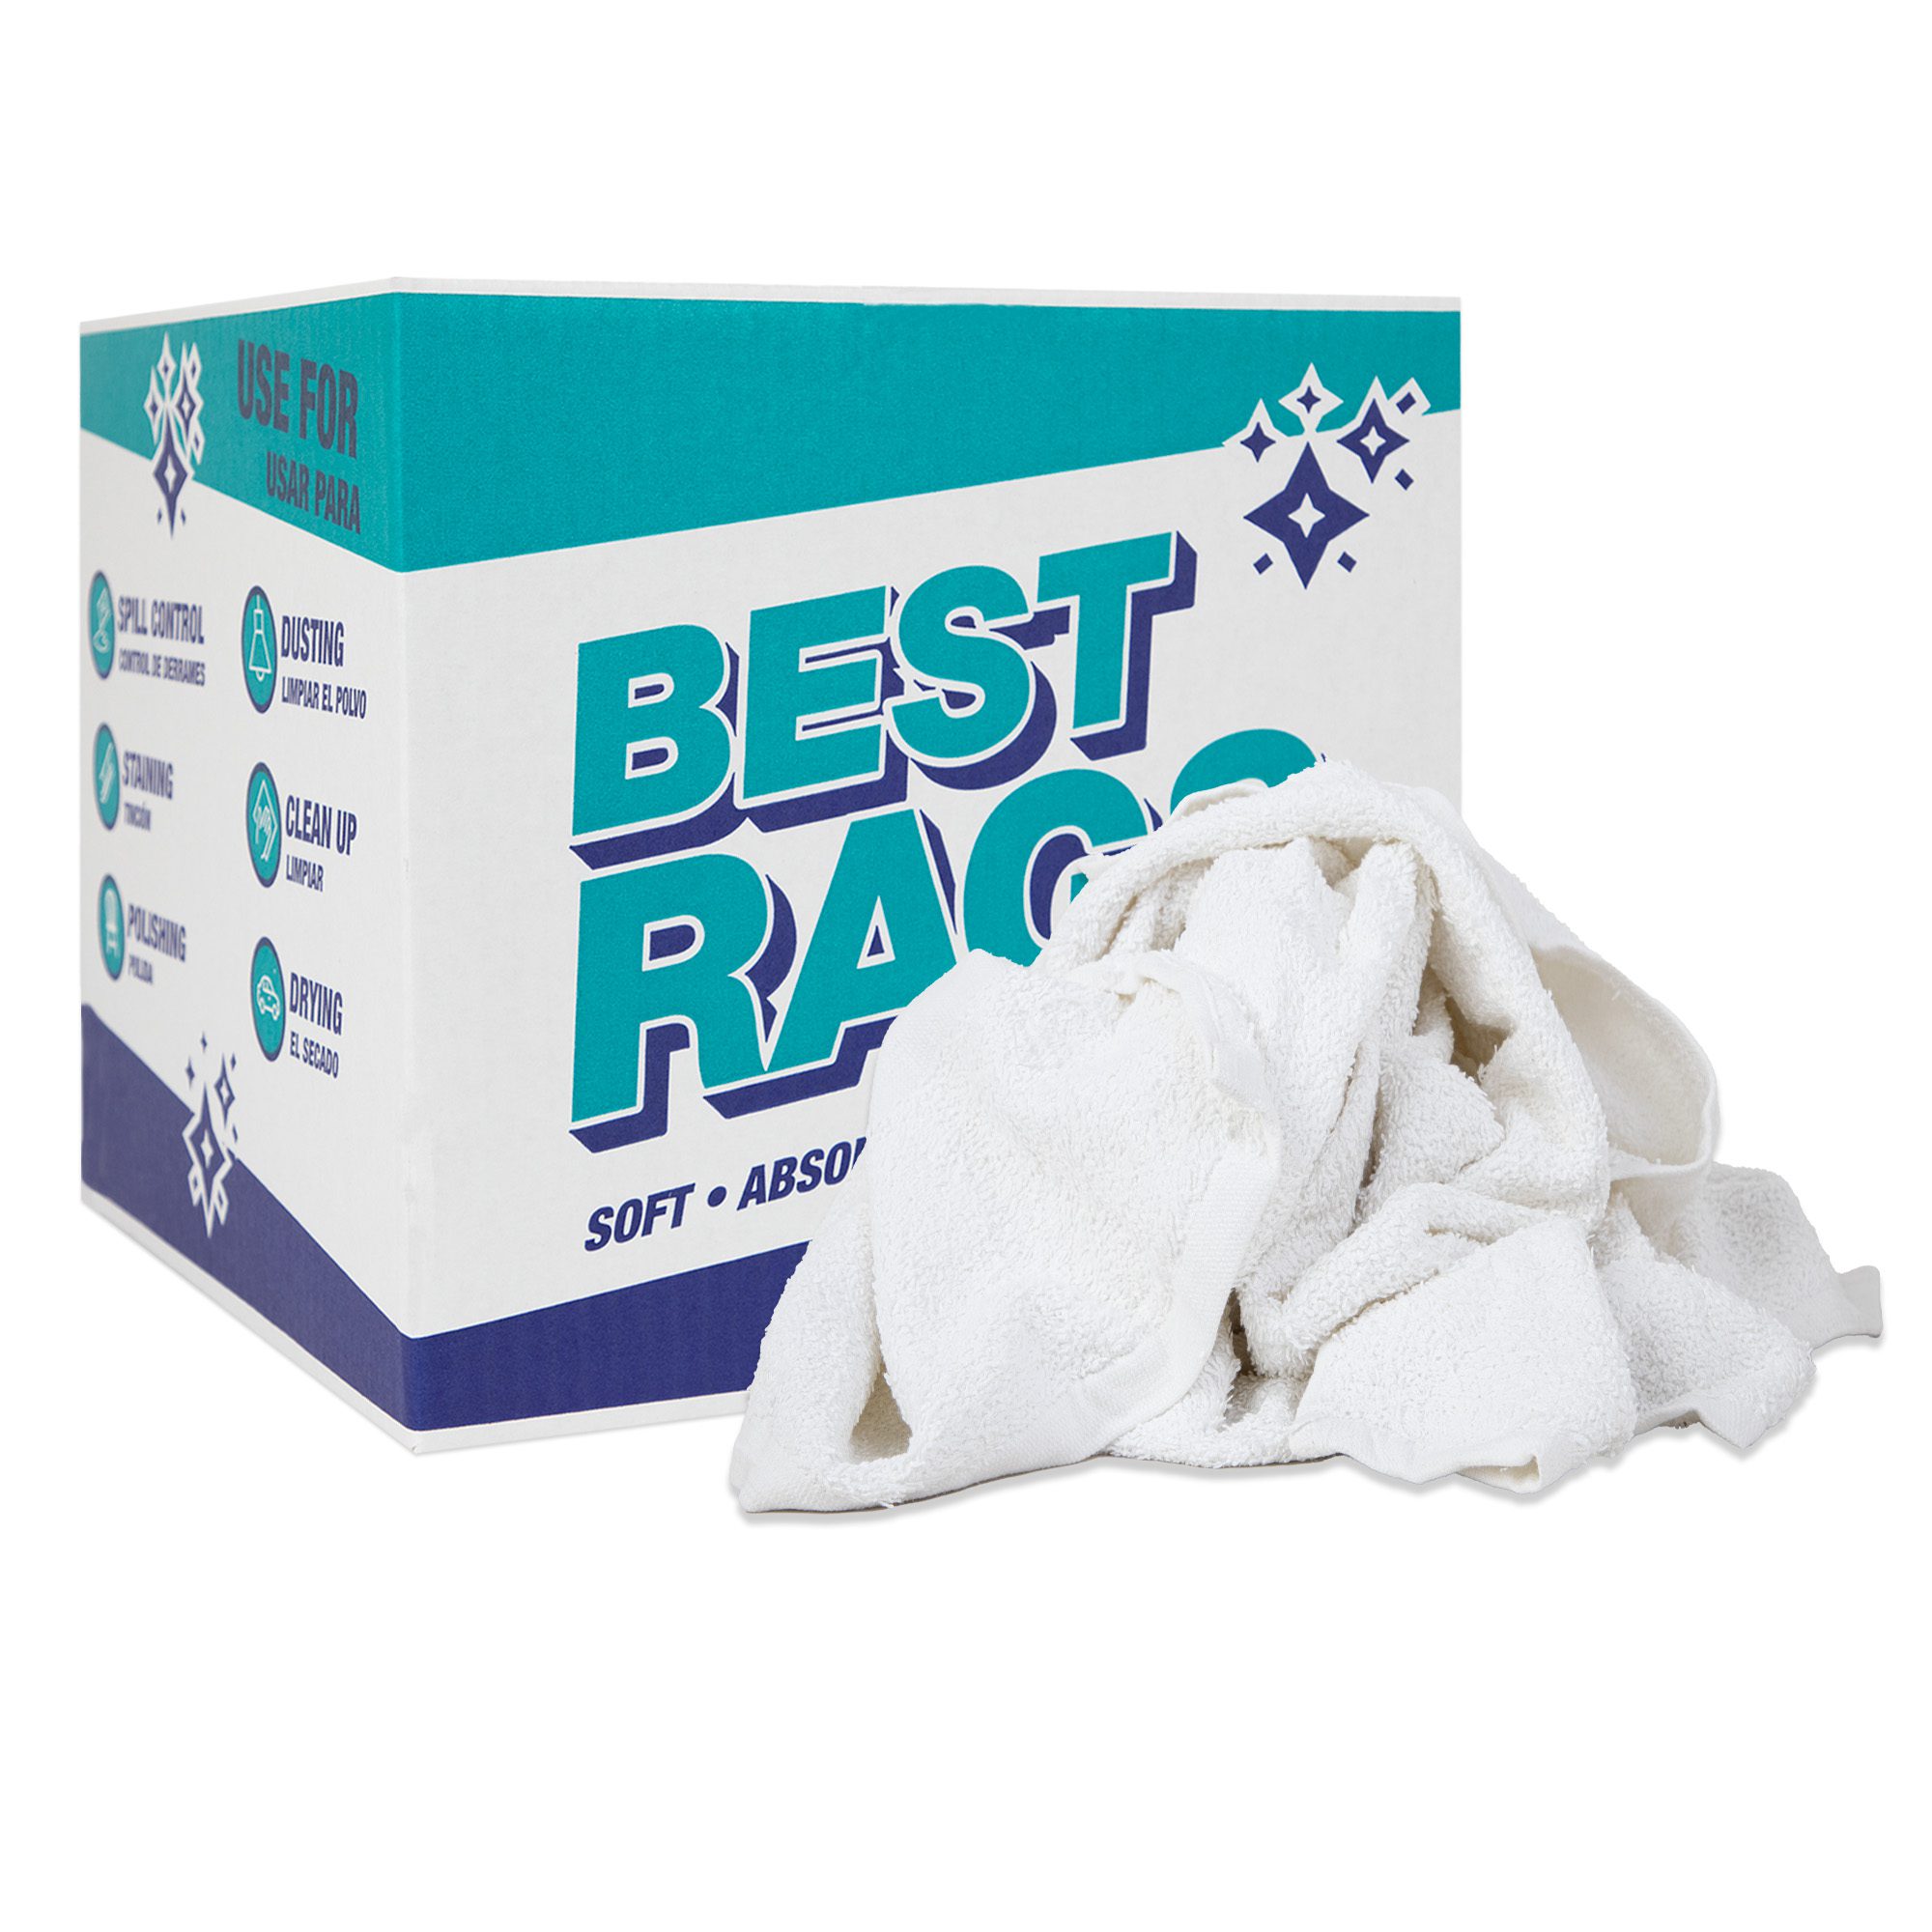 Bulk Huck Absorbent Towels – Industrial Wiping – Monarch Brands